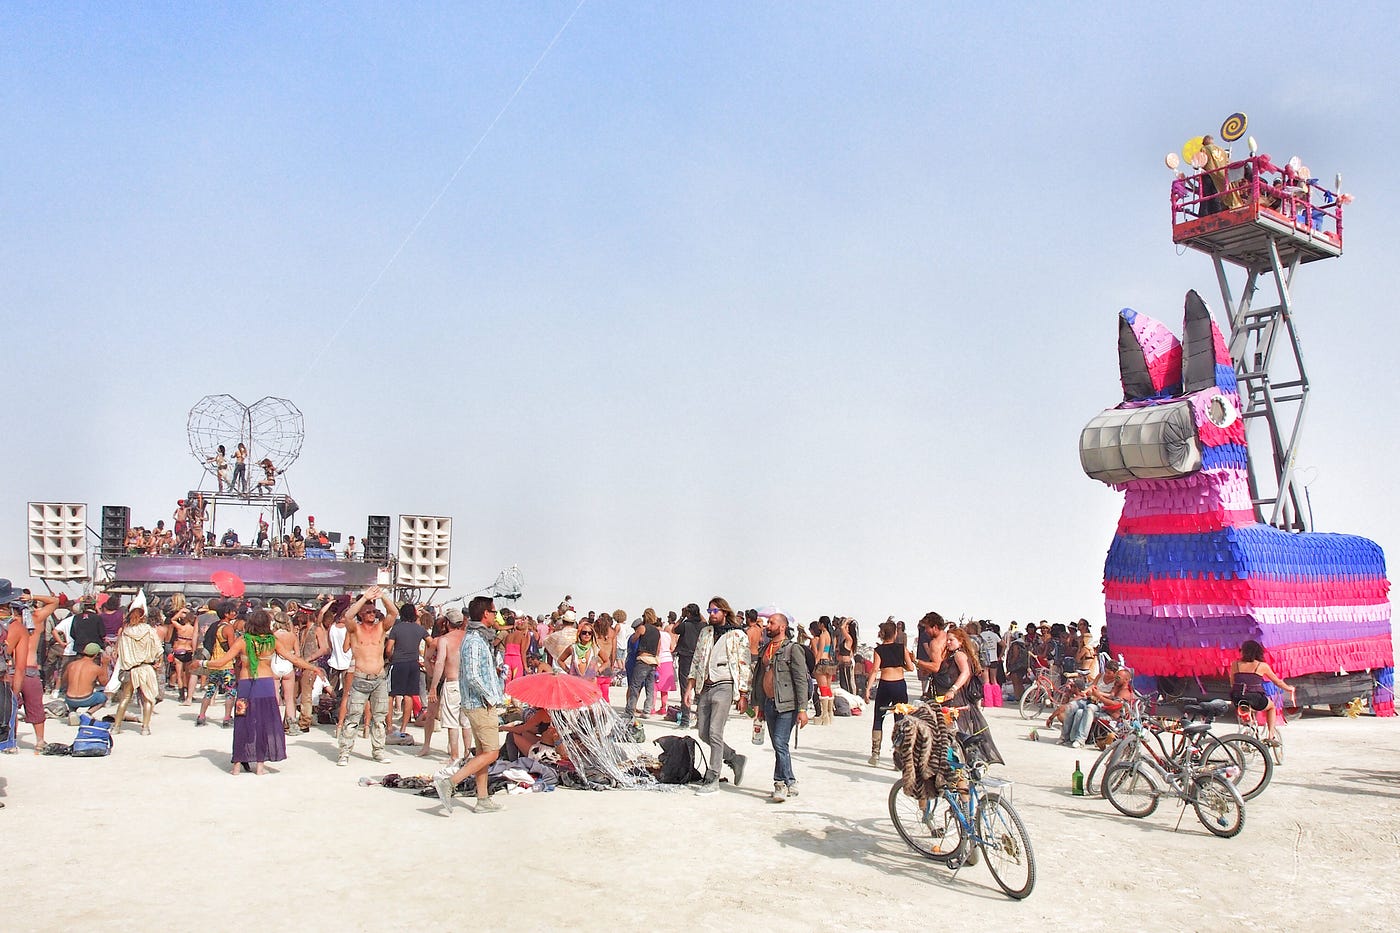 Slováci na festivale Burning Man — bez drog | by Michal Pastier | Medium